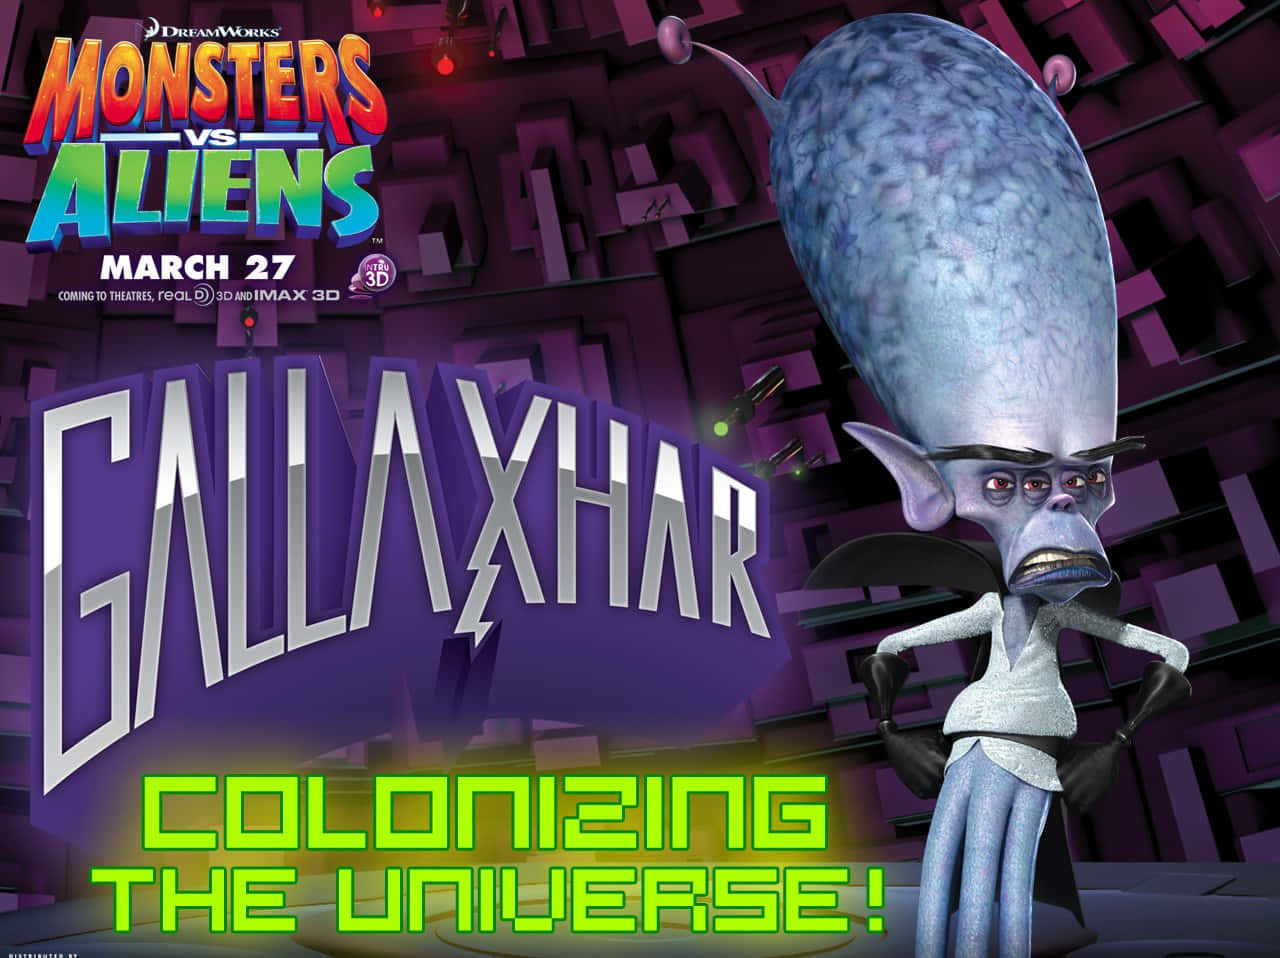 monsters vs aliens gallaxhar